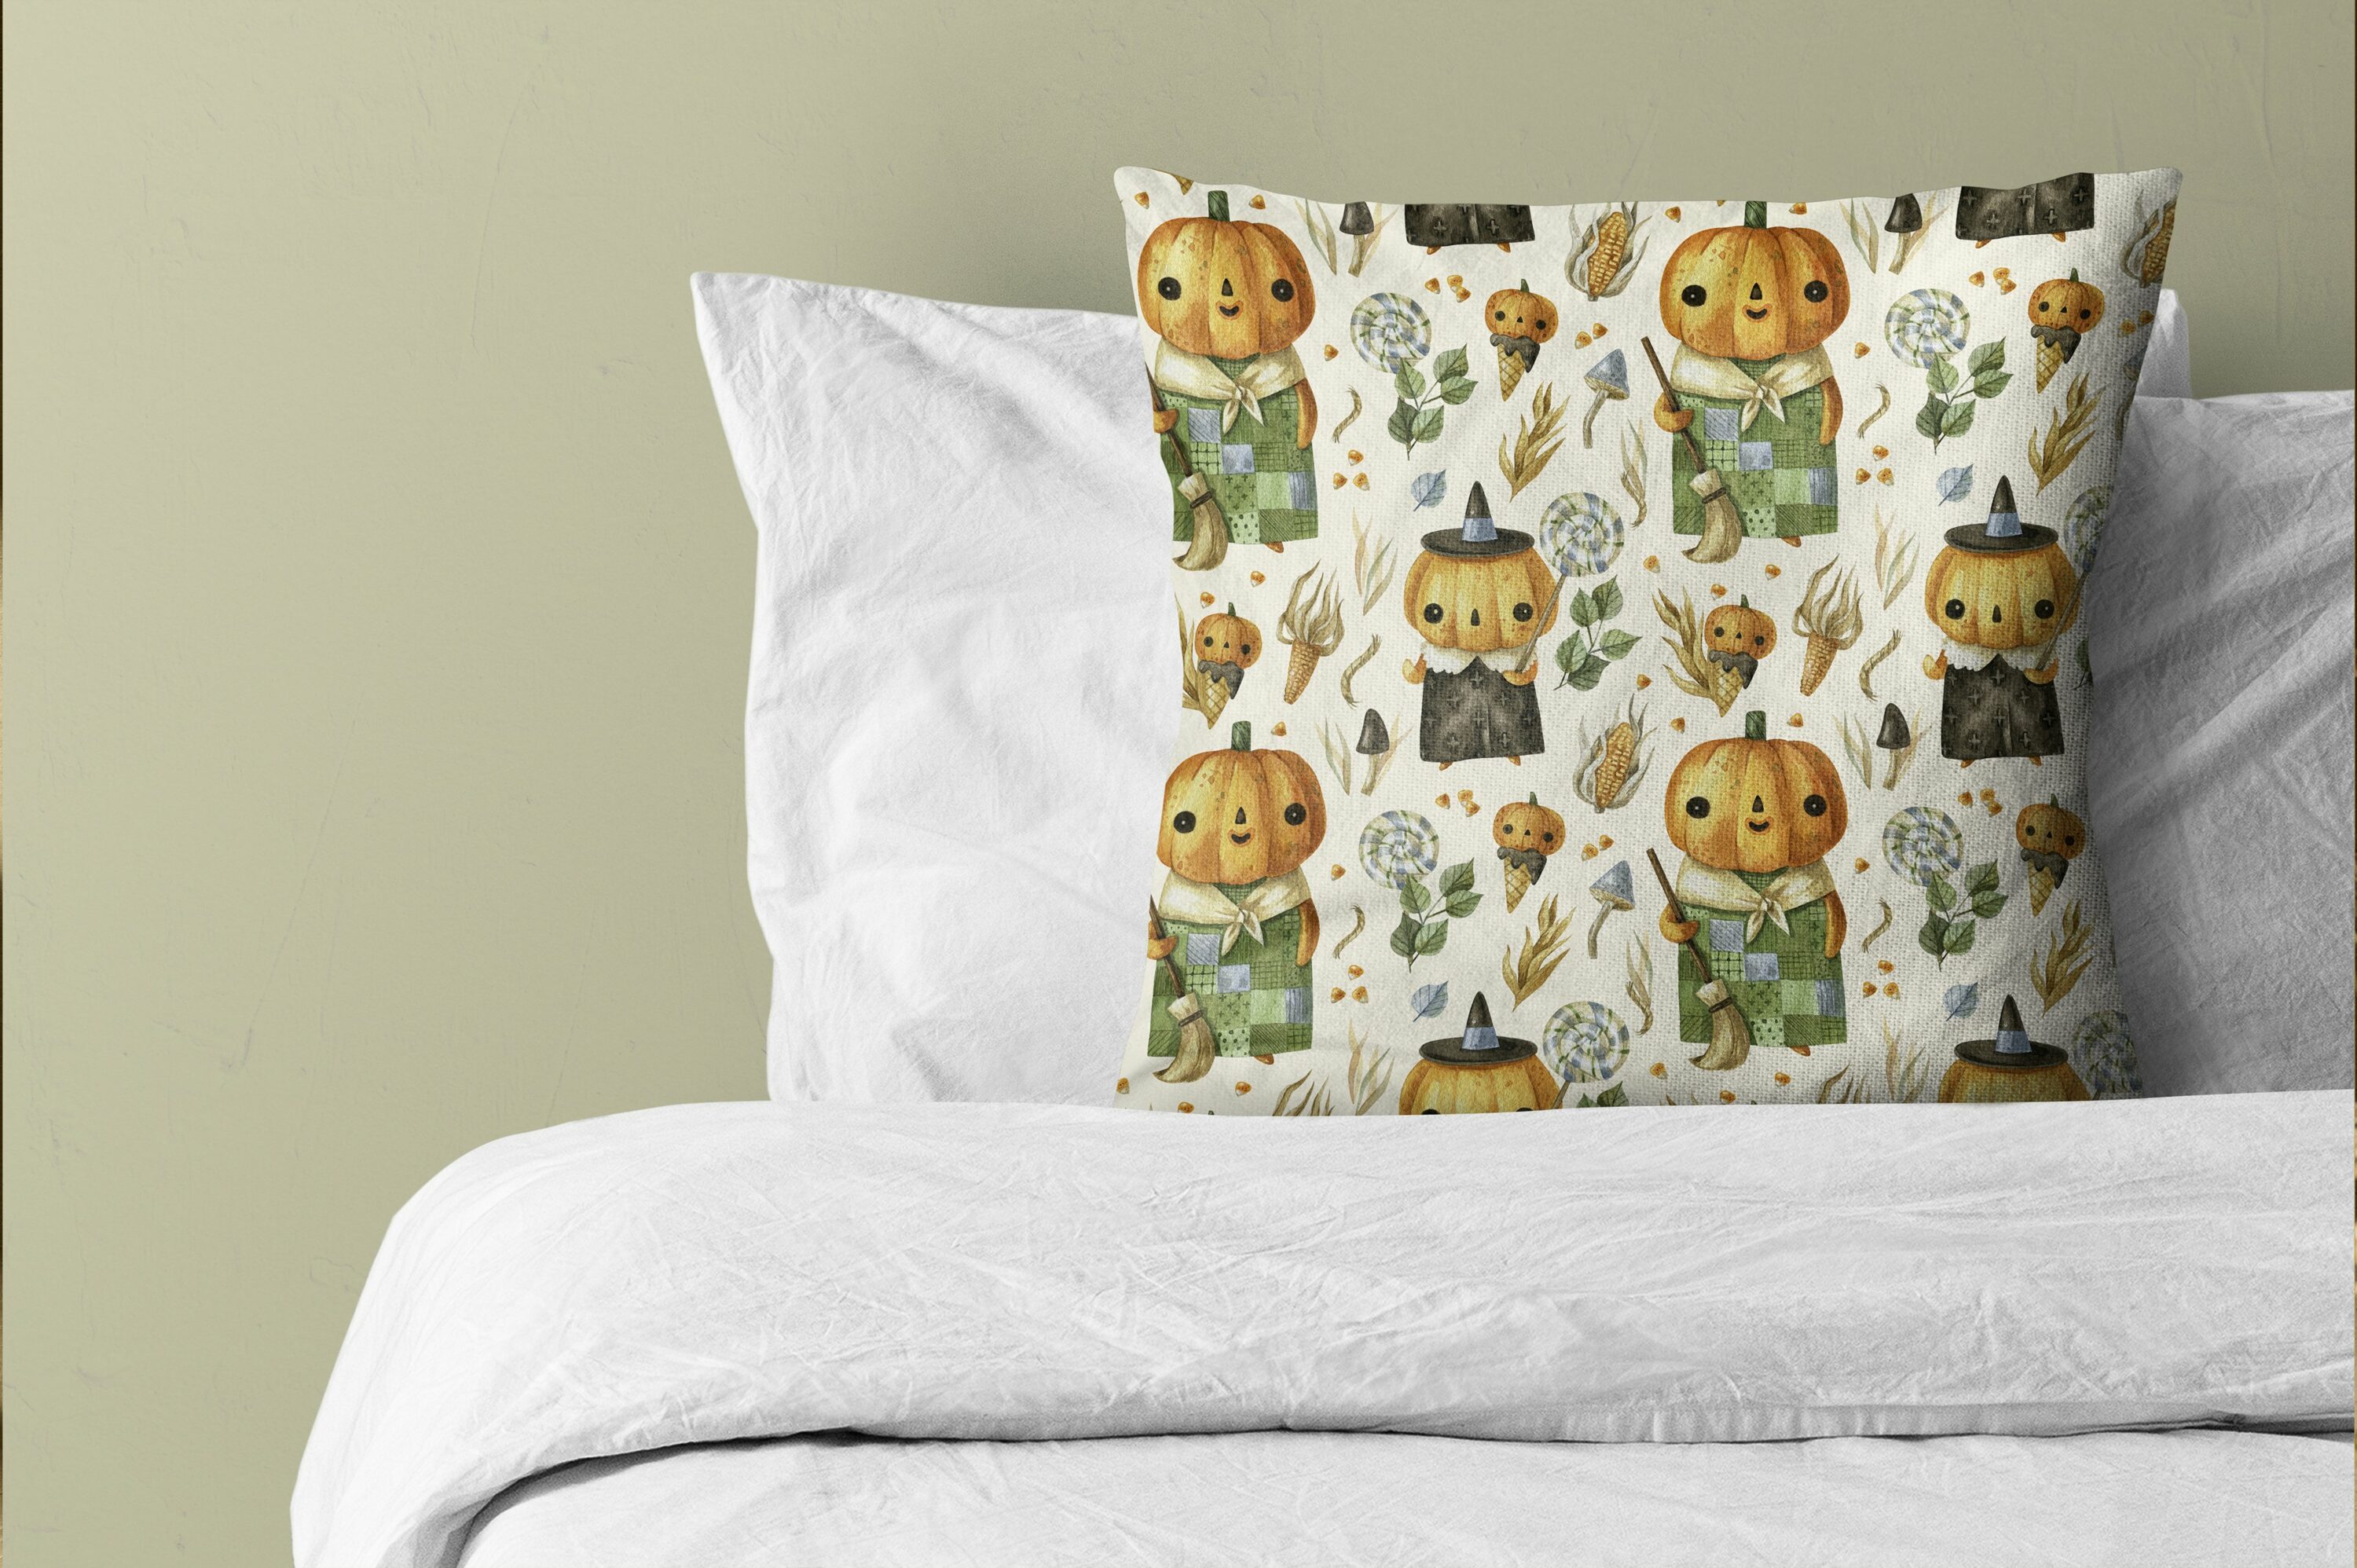 Decorate pillow with the autumn pumpkin men.